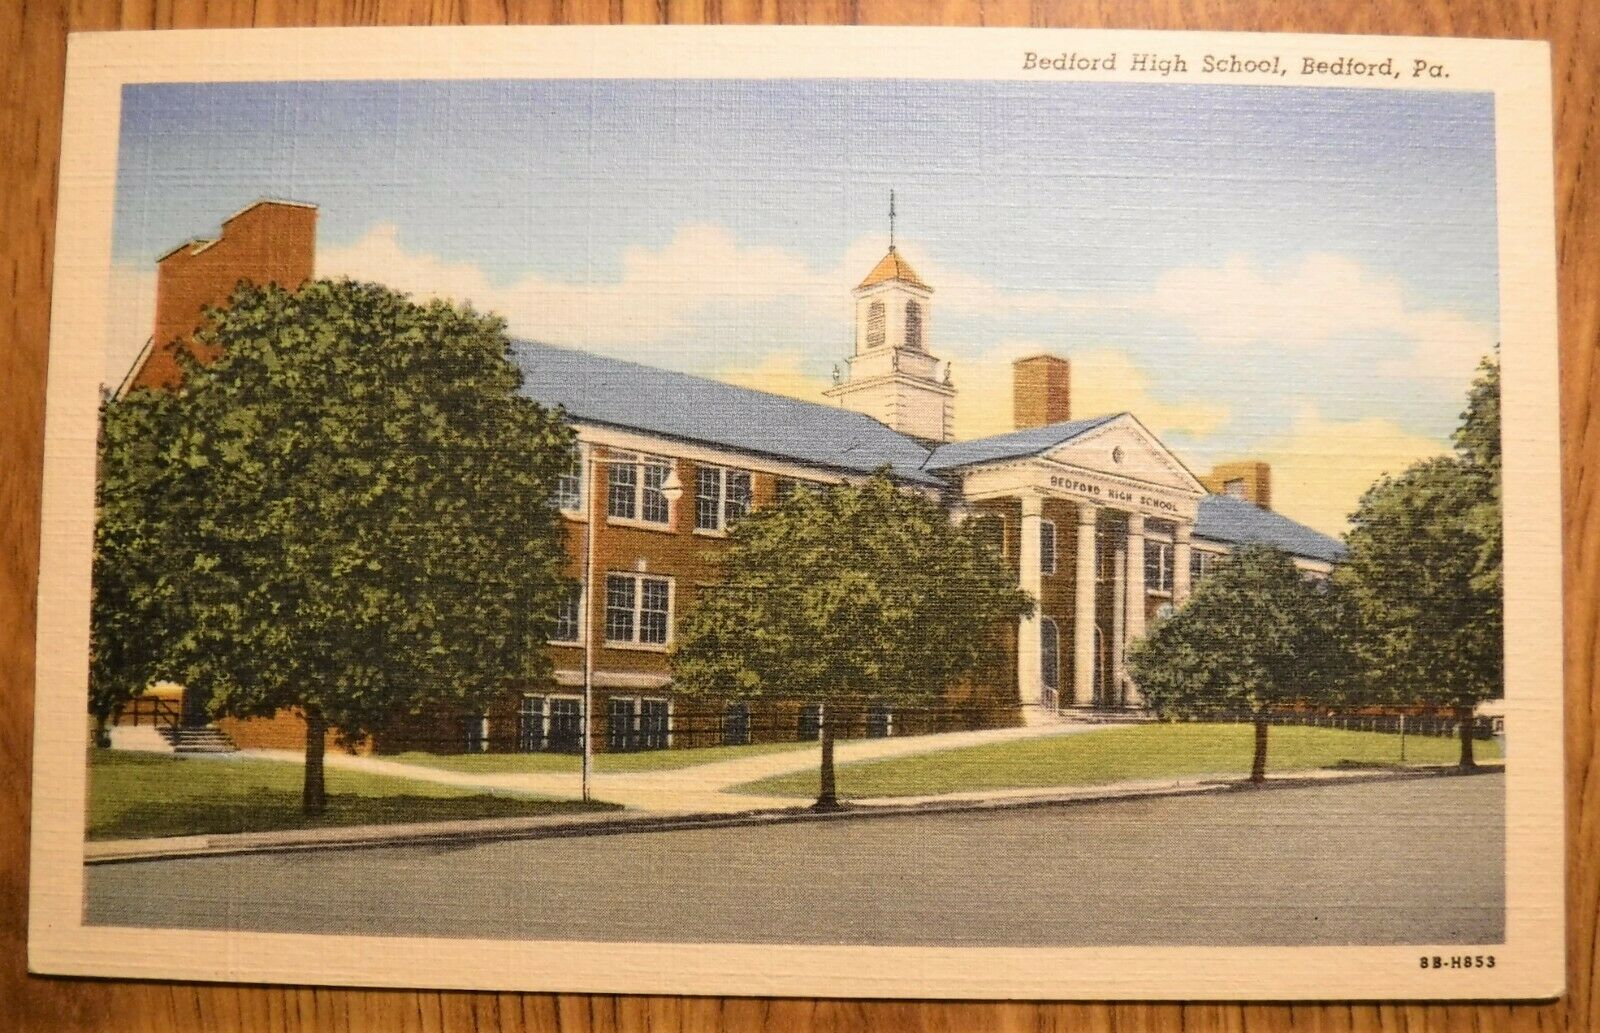 BEDFORD HIGH SCHOOL, BEDFORD, PA. (239)